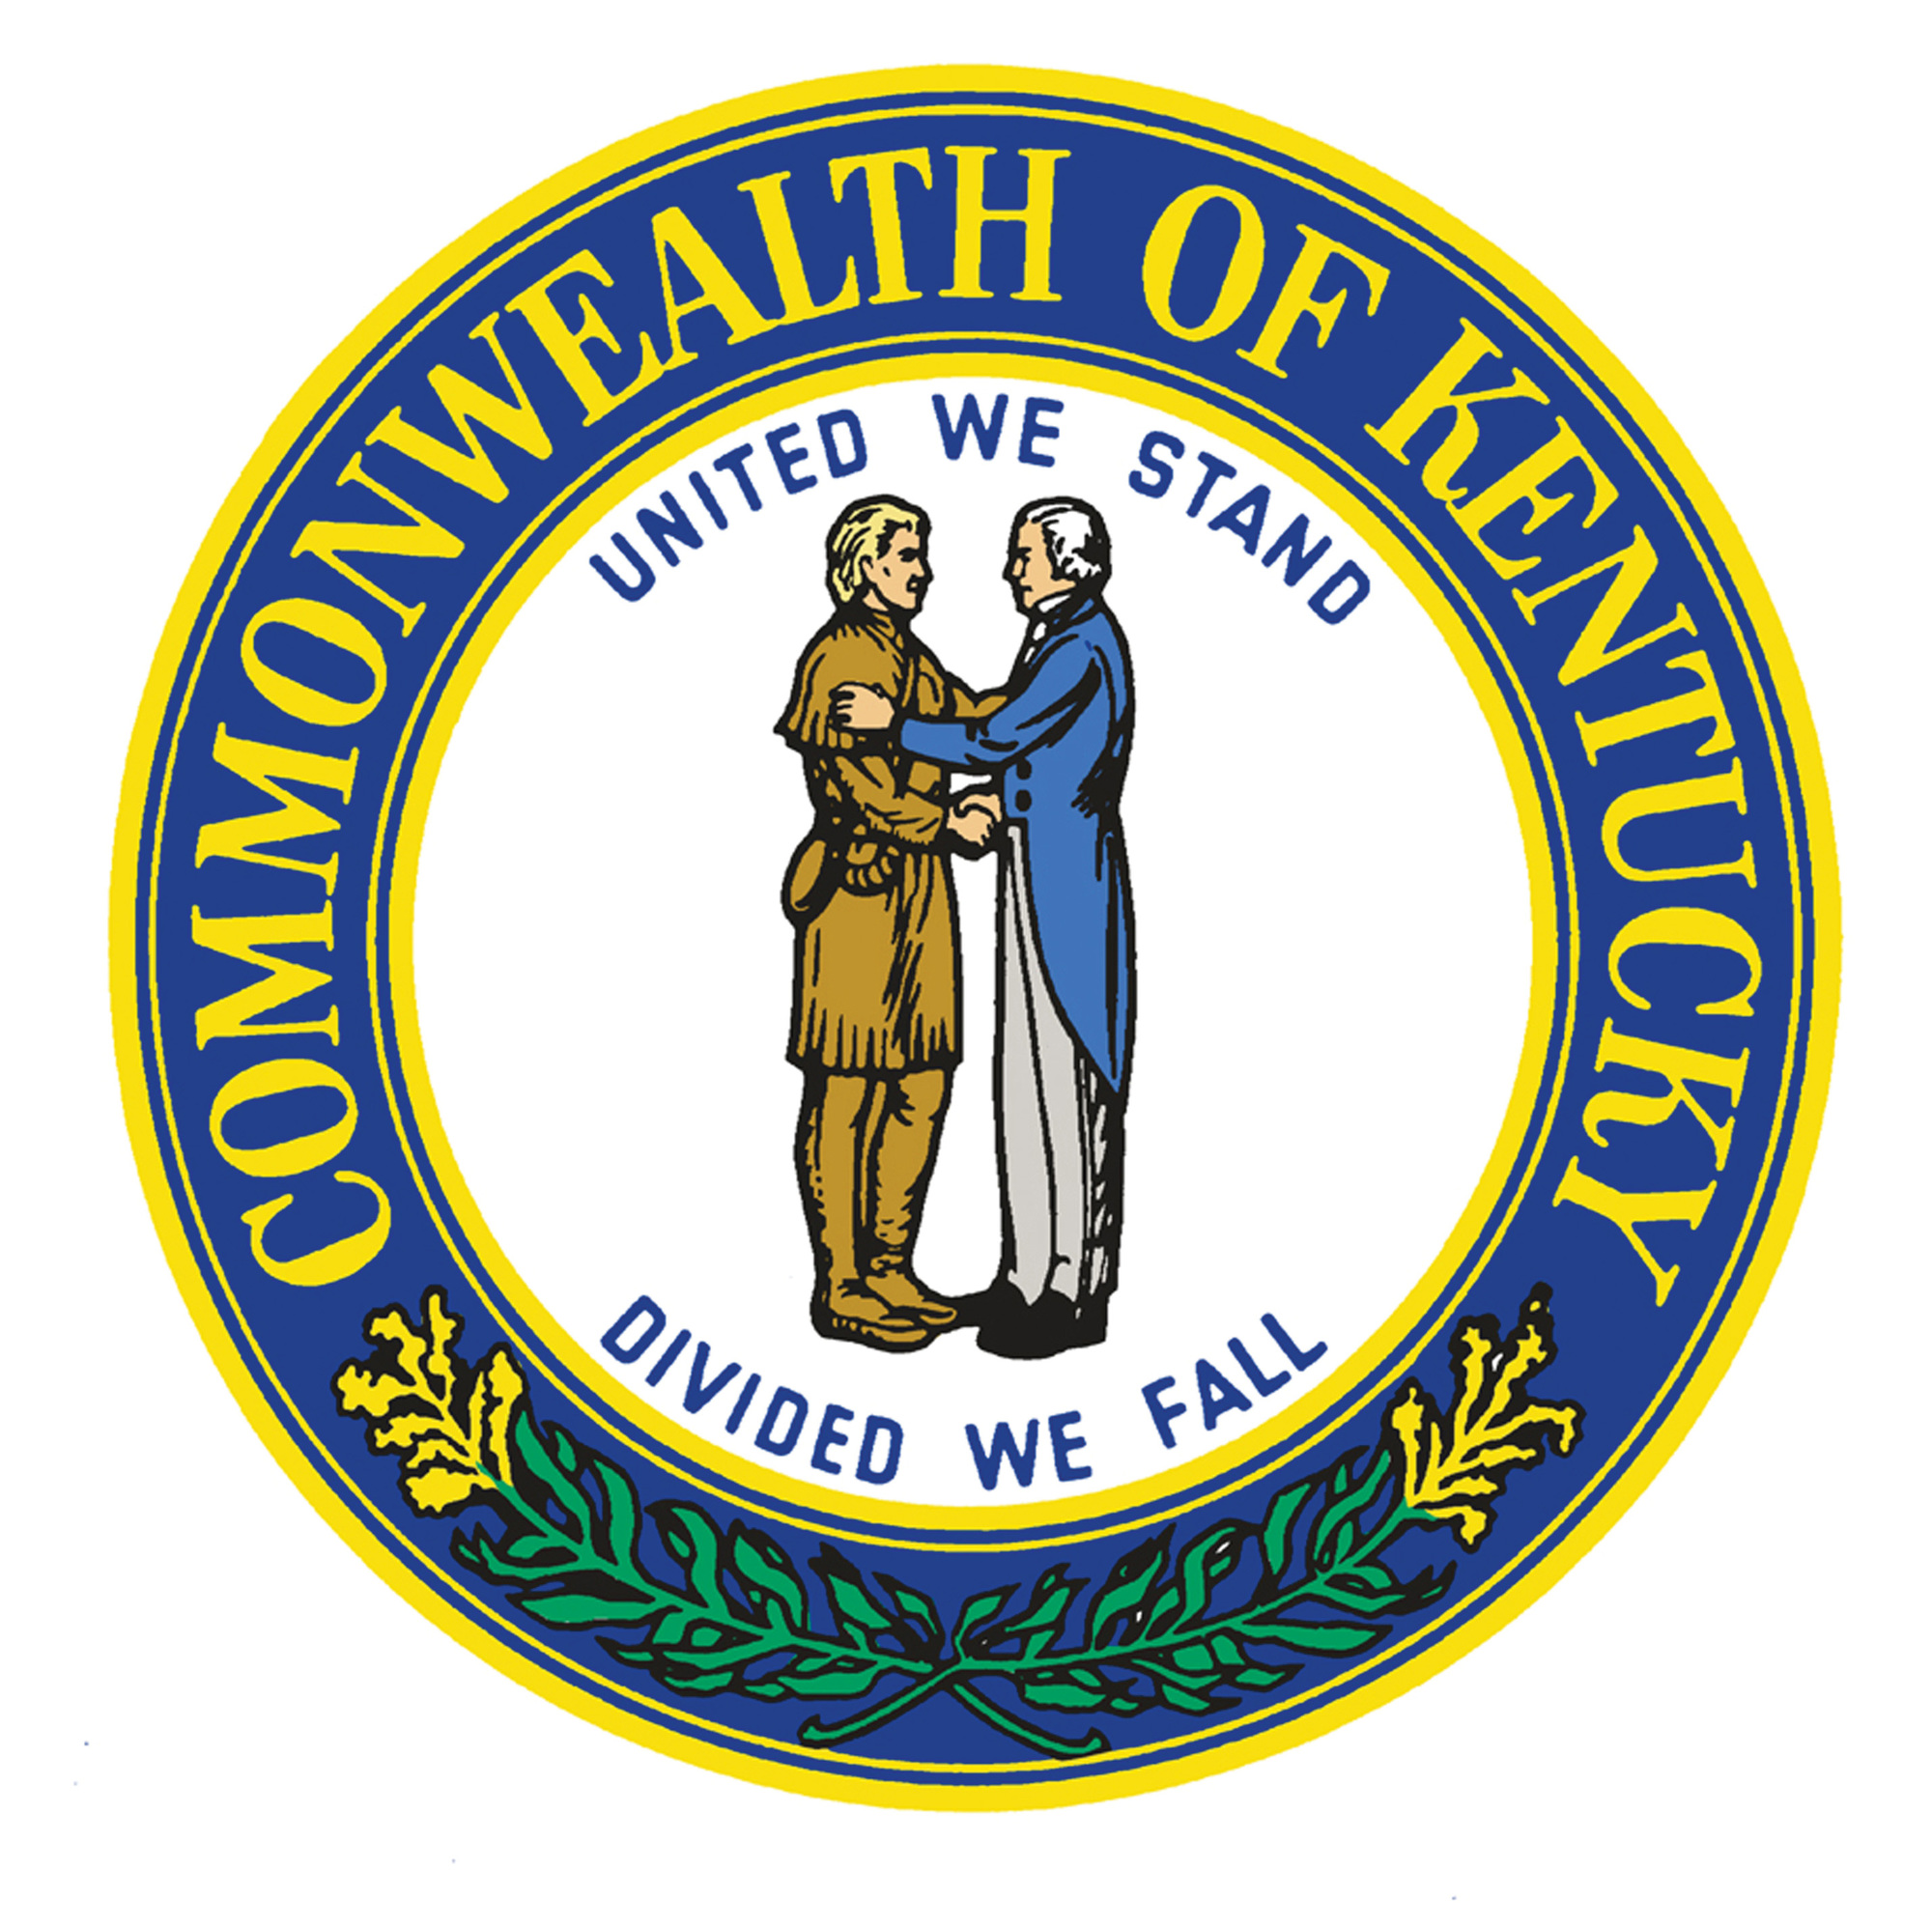 Kentucky Cabinet for Economic Development